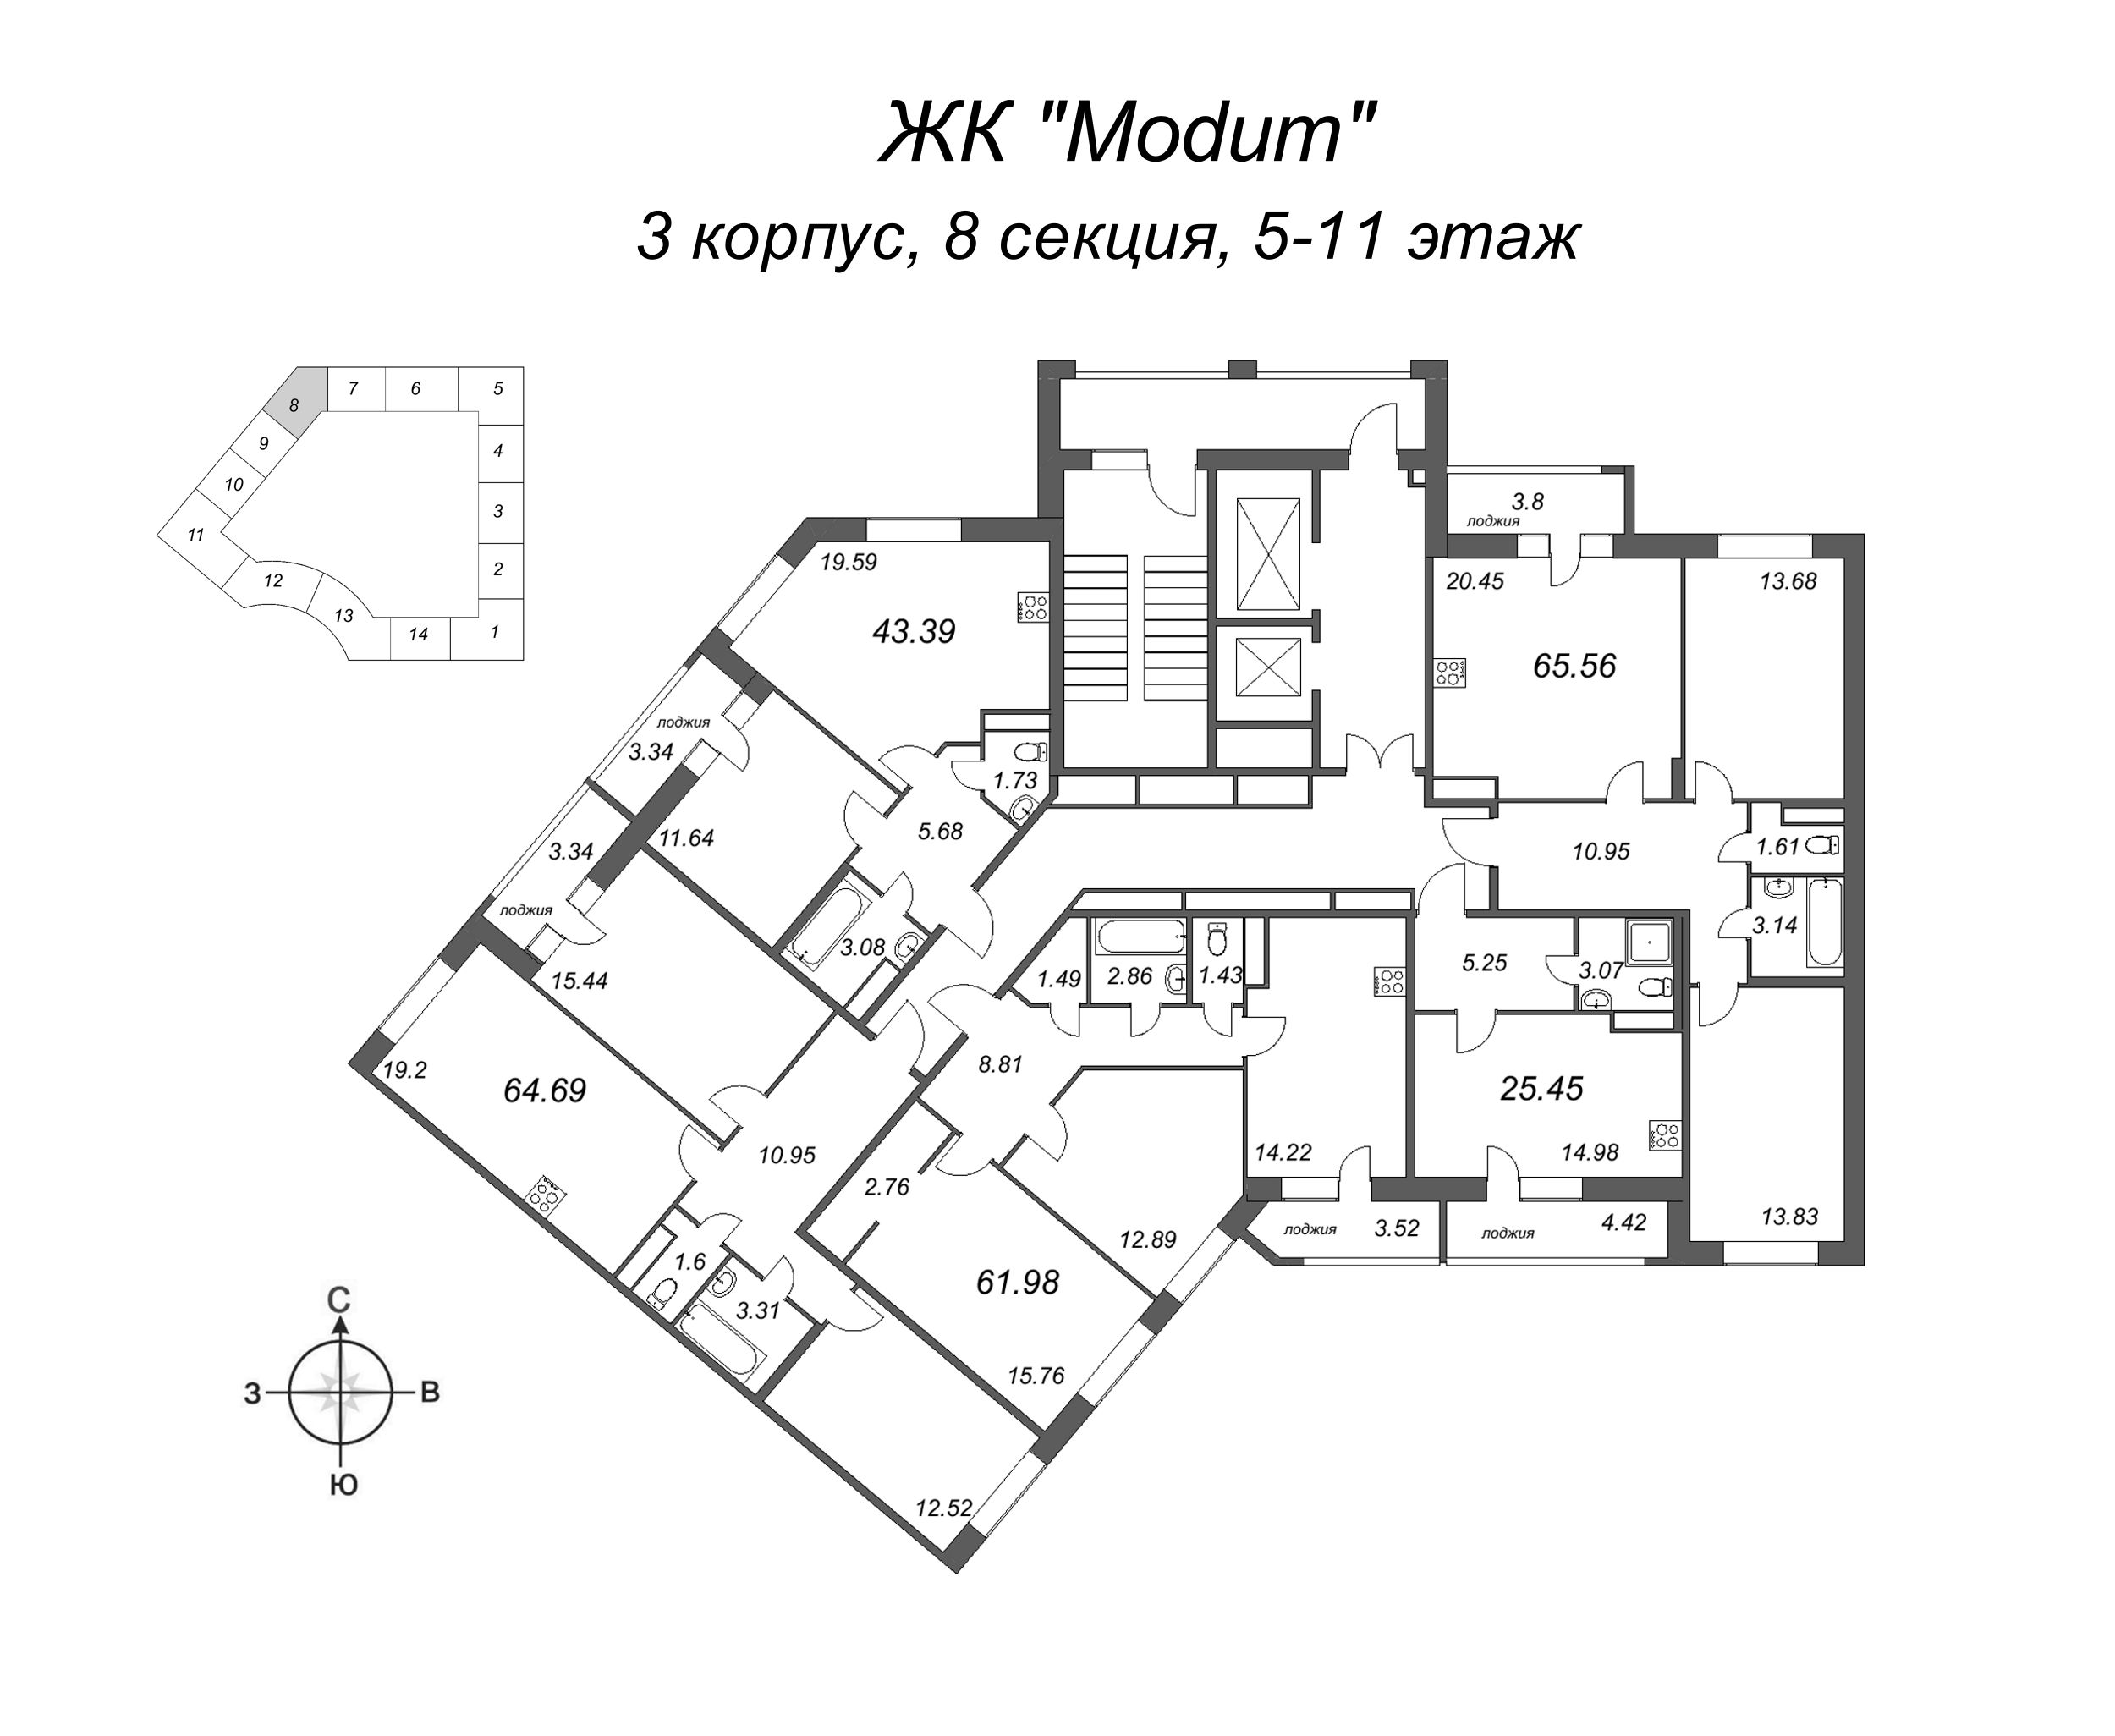 3-комнатная (Евро) квартира, 64.69 м² - планировка этажа